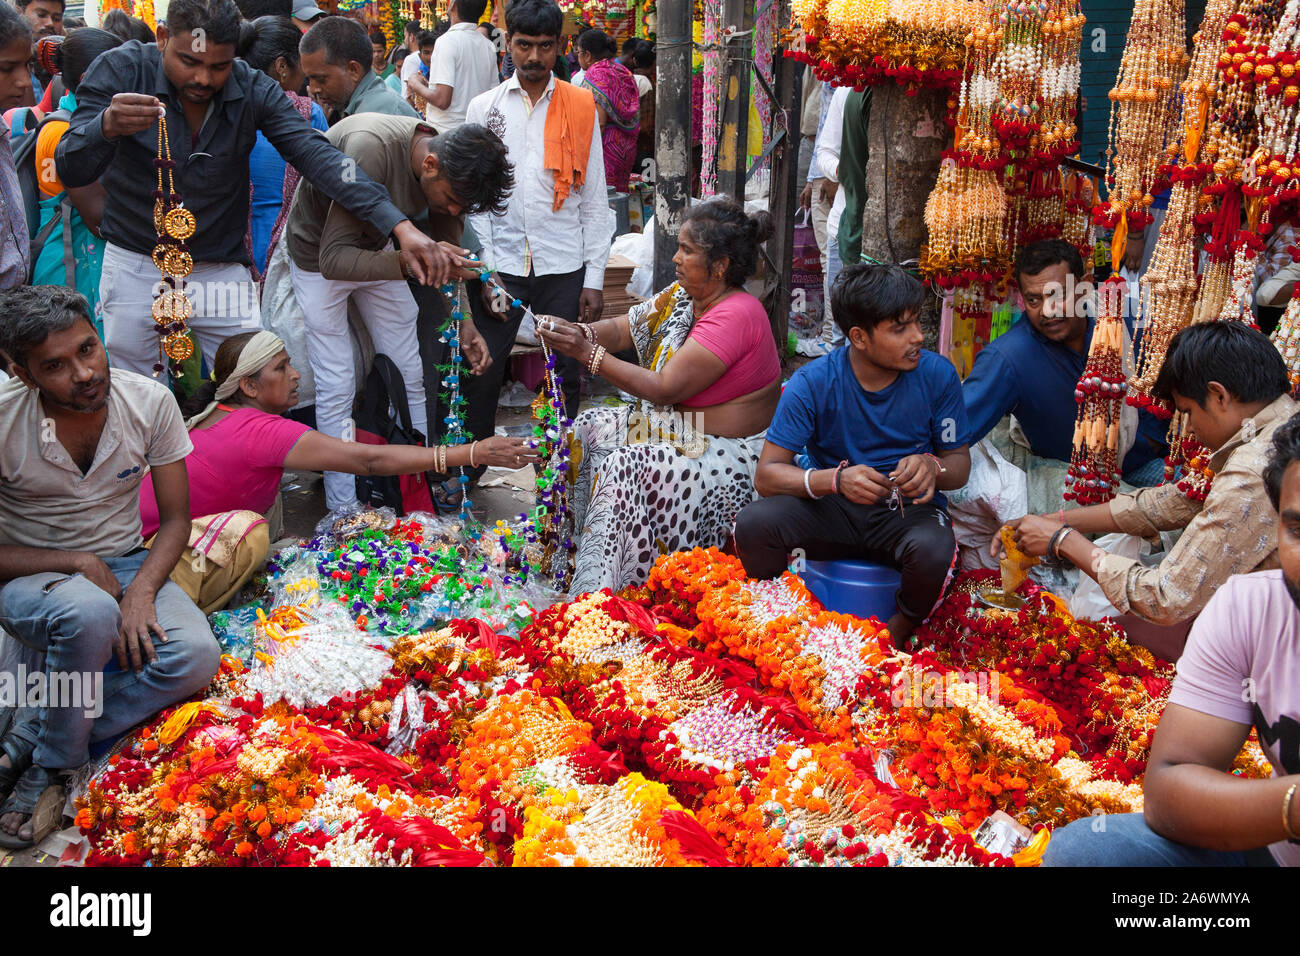 Vendors selling Diwali decorations in the Sadar Bazar district of Delhi Stock Photo